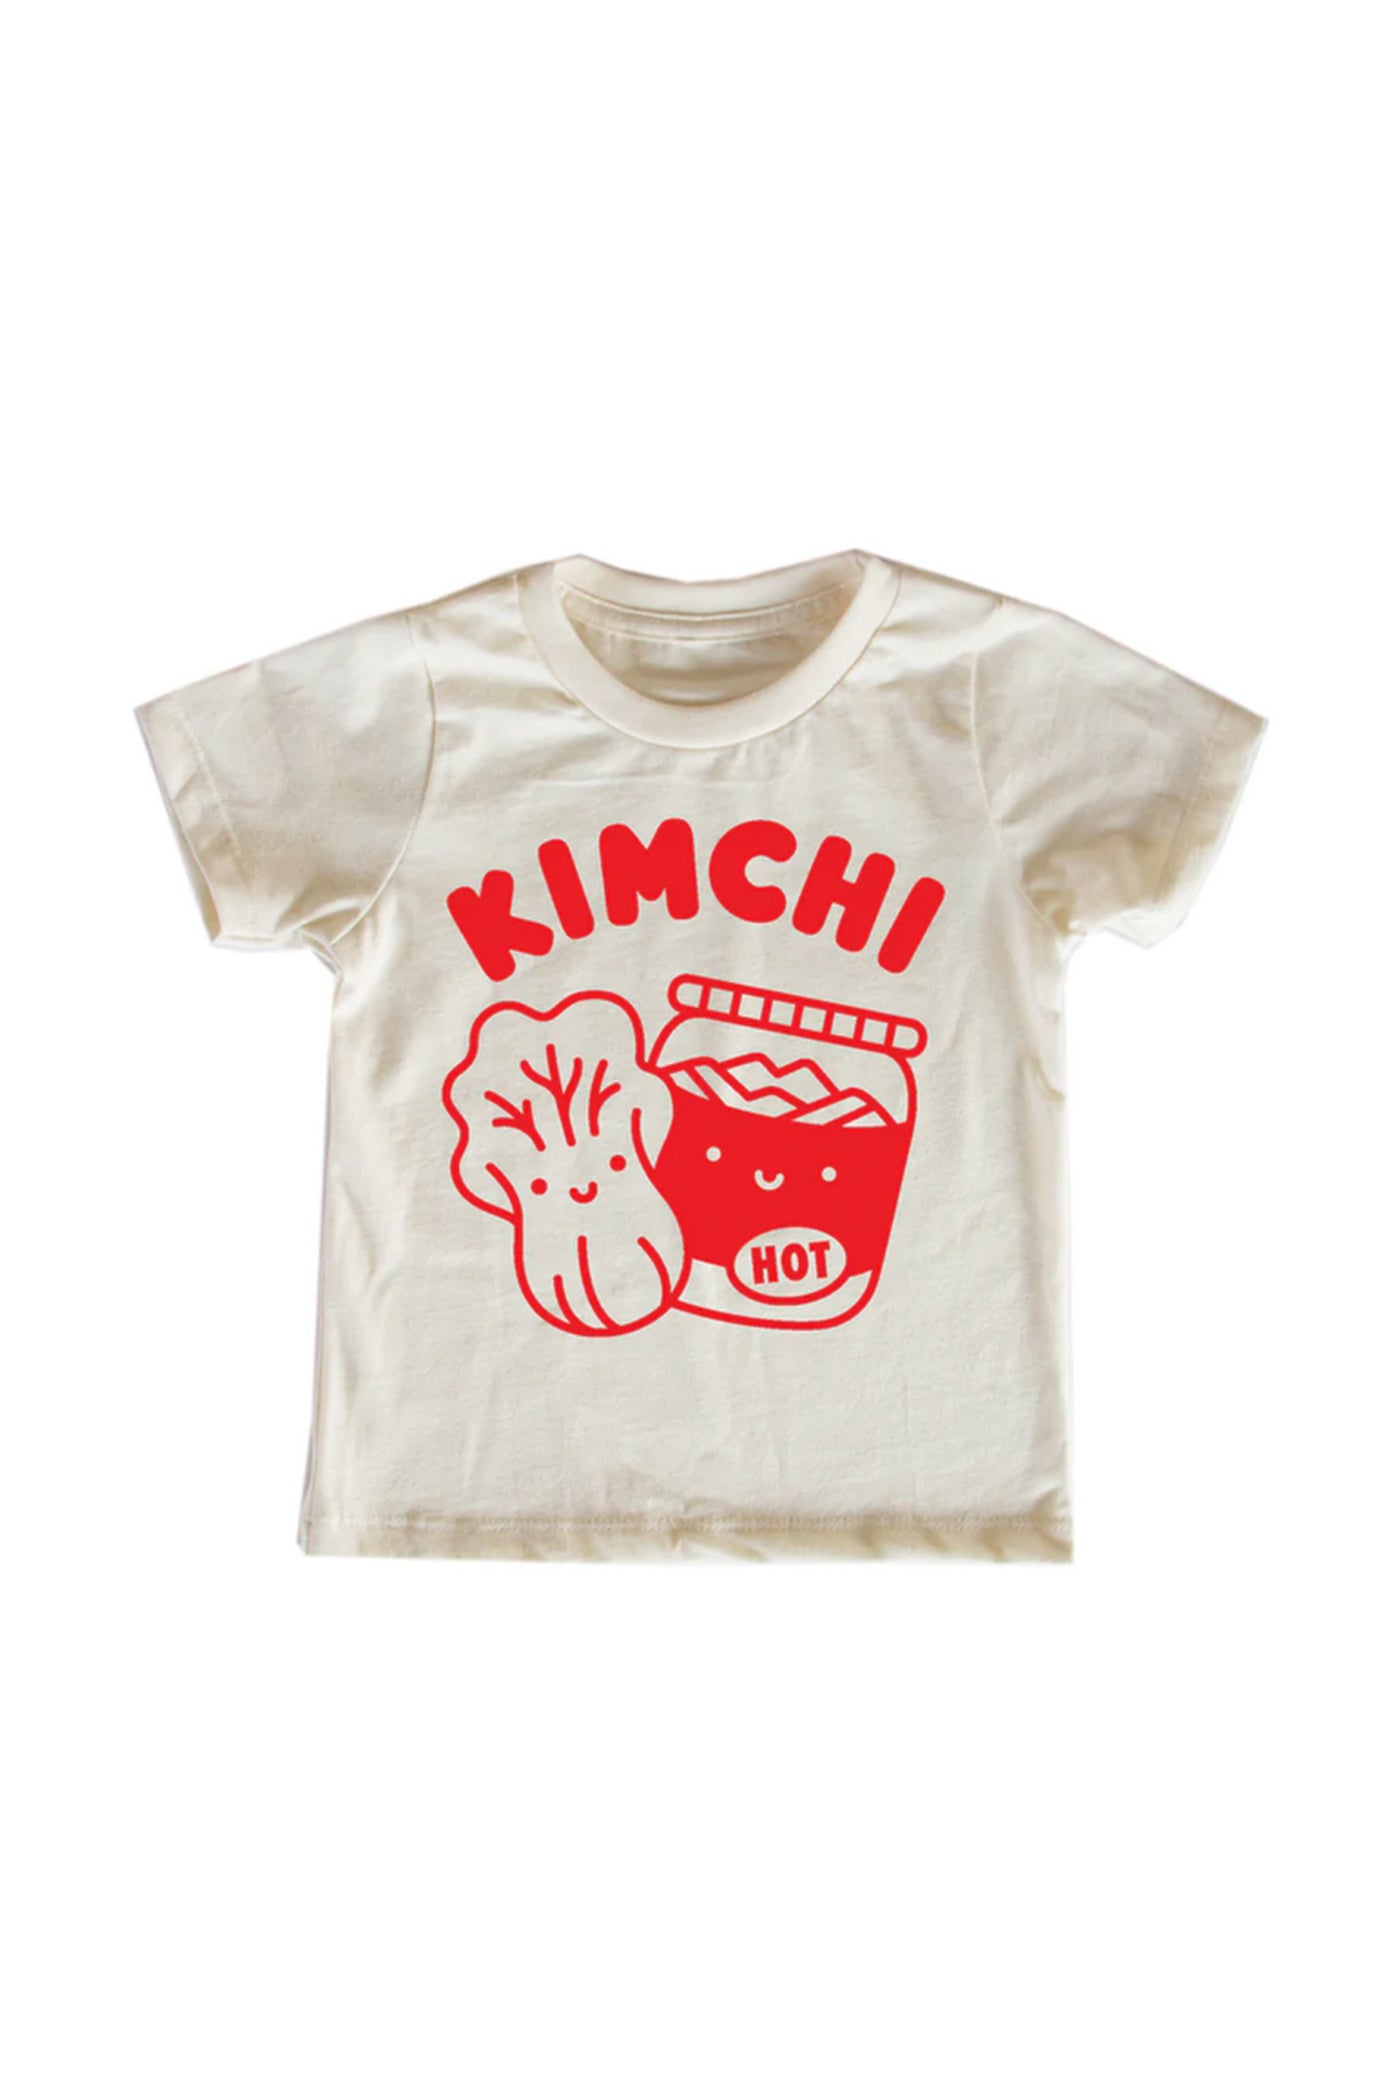 Kimchi Kids Graphic Tee